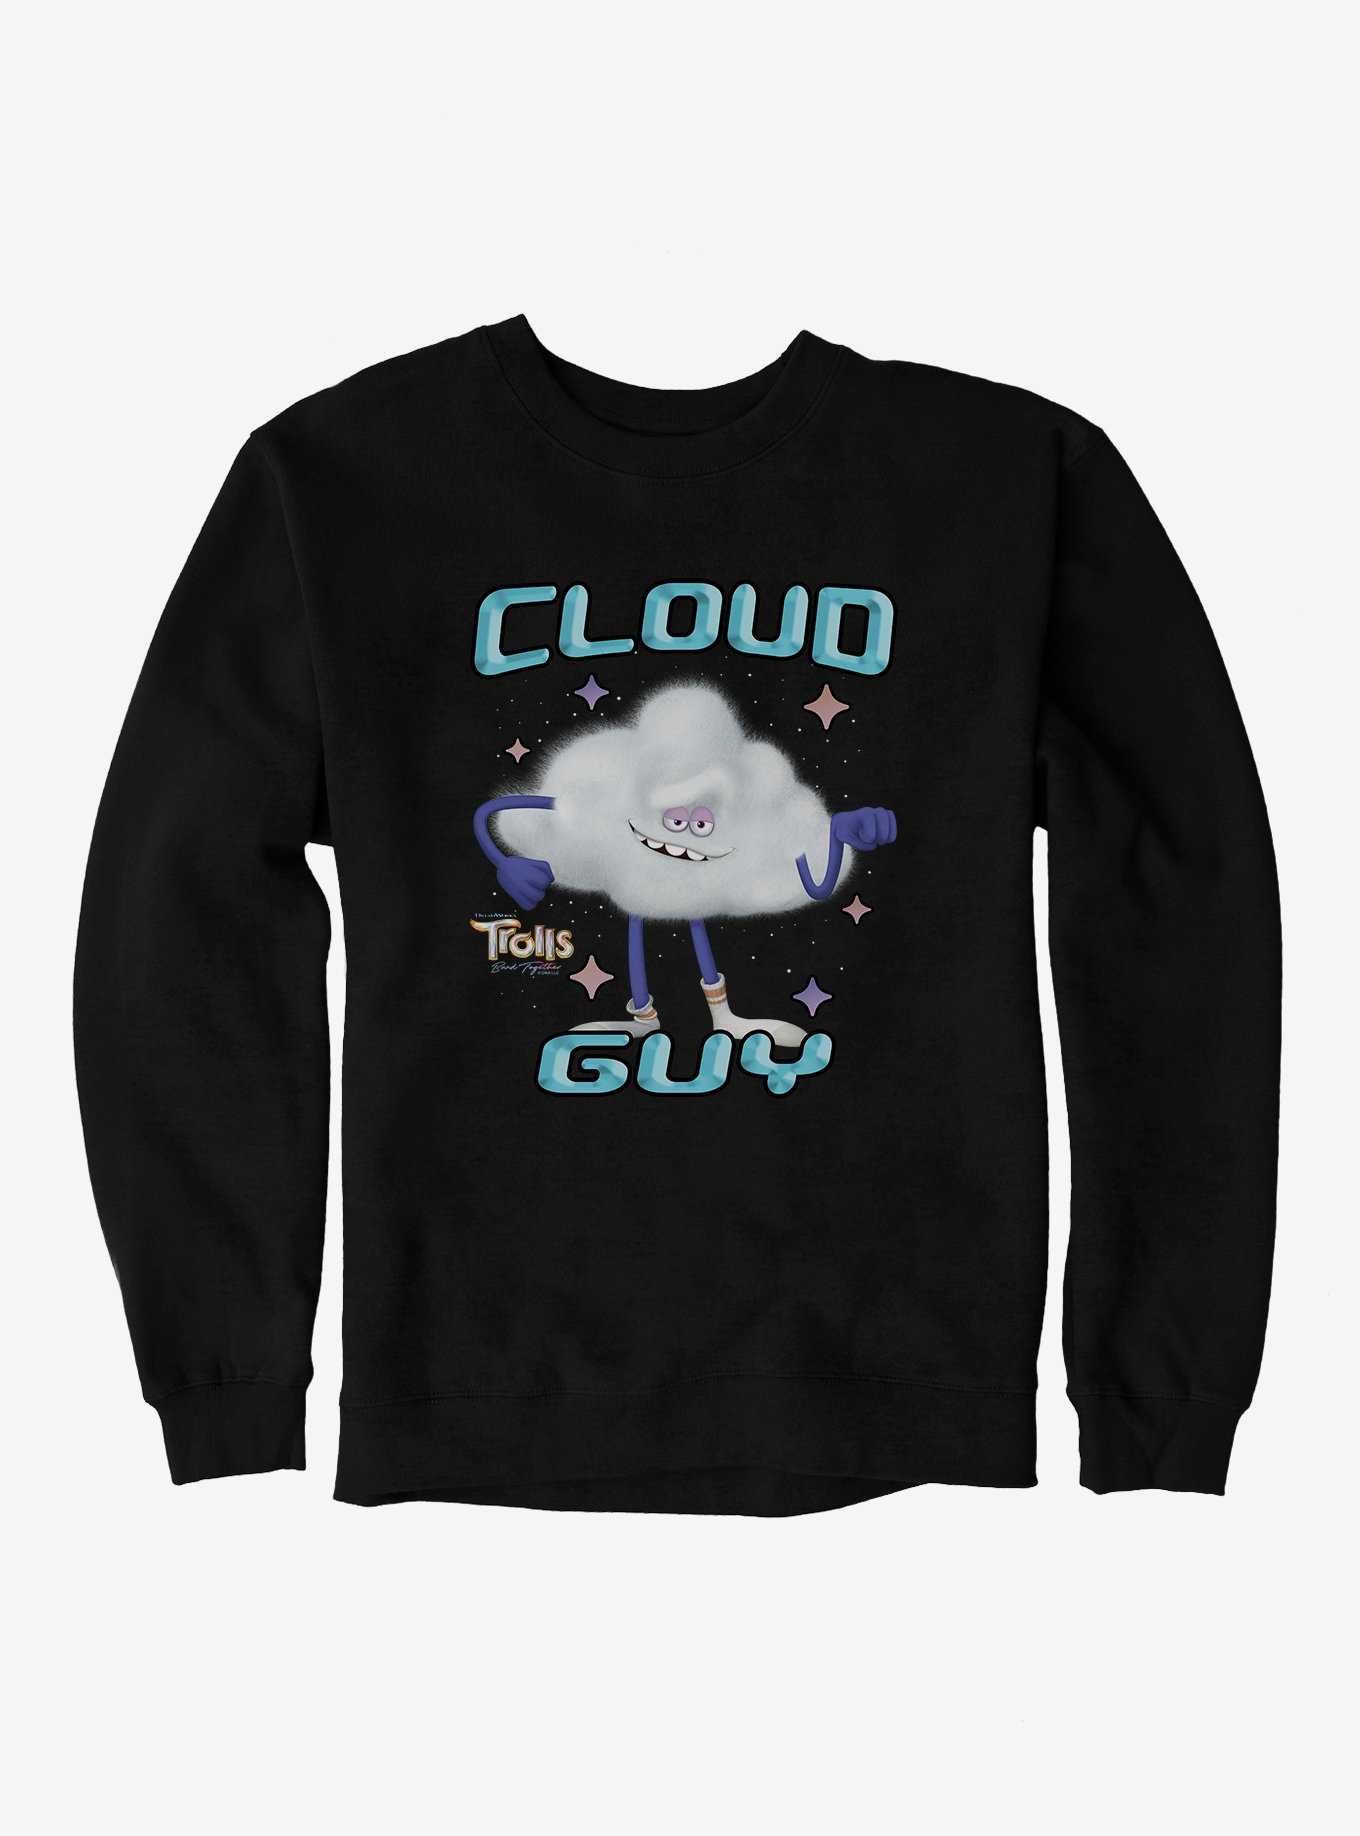 Trolls 3 Band Together Cloud Guy Sweatshirt, , hi-res